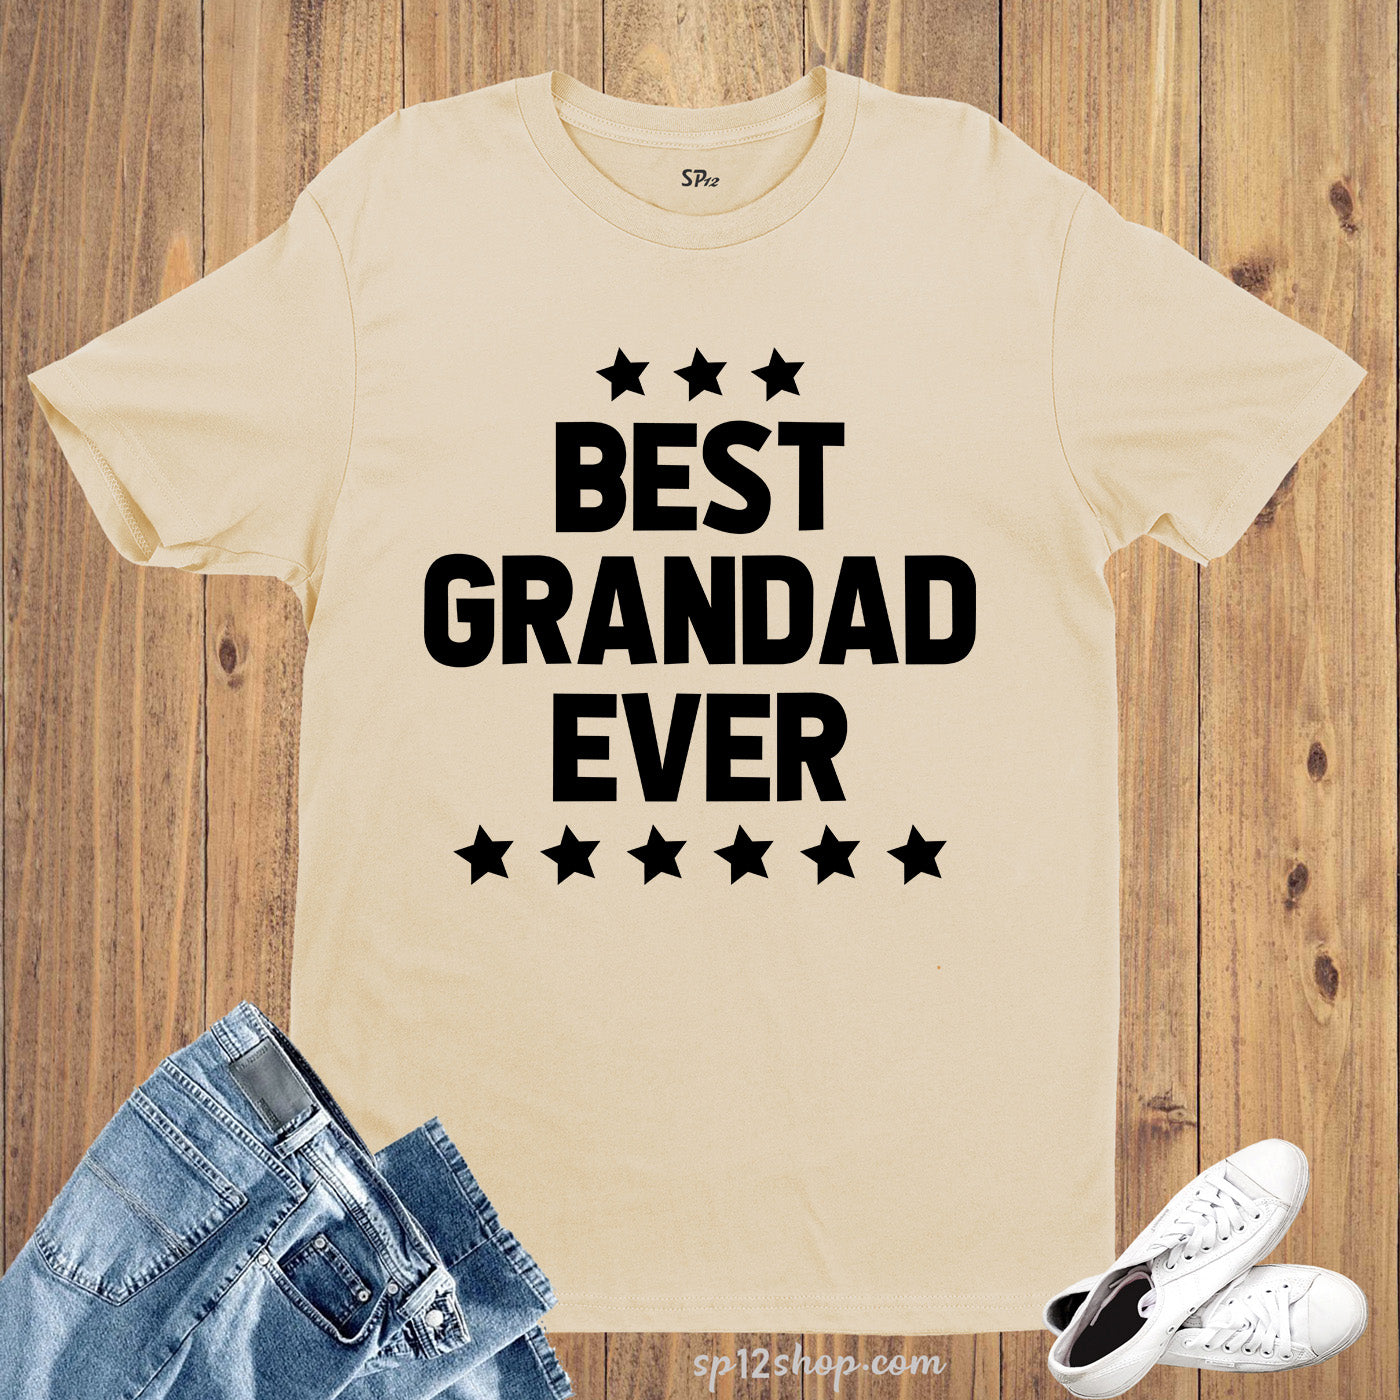 Best Grandad Ever T Shirts